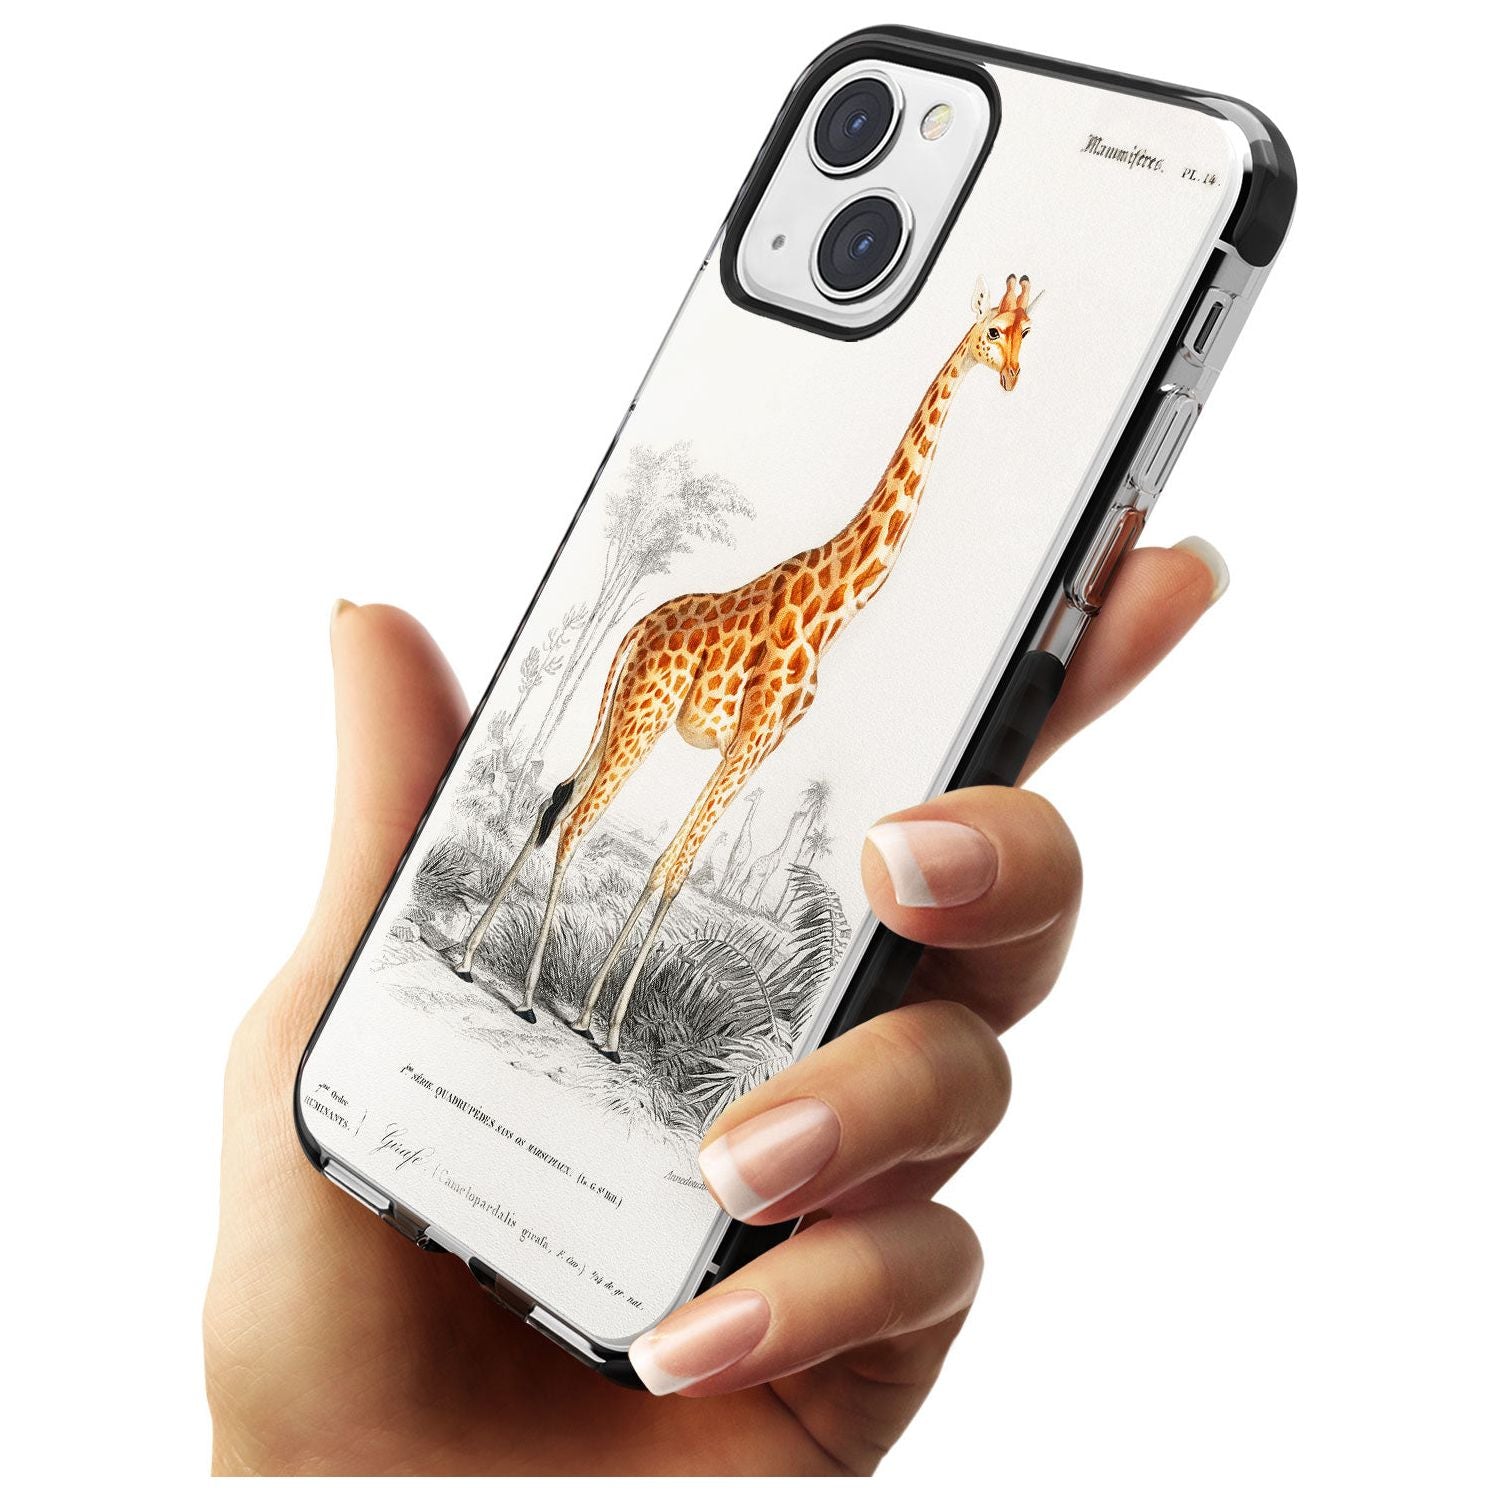 Vintage Girafe Art Black Impact Phone Case for iPhone 13 & 13 Mini